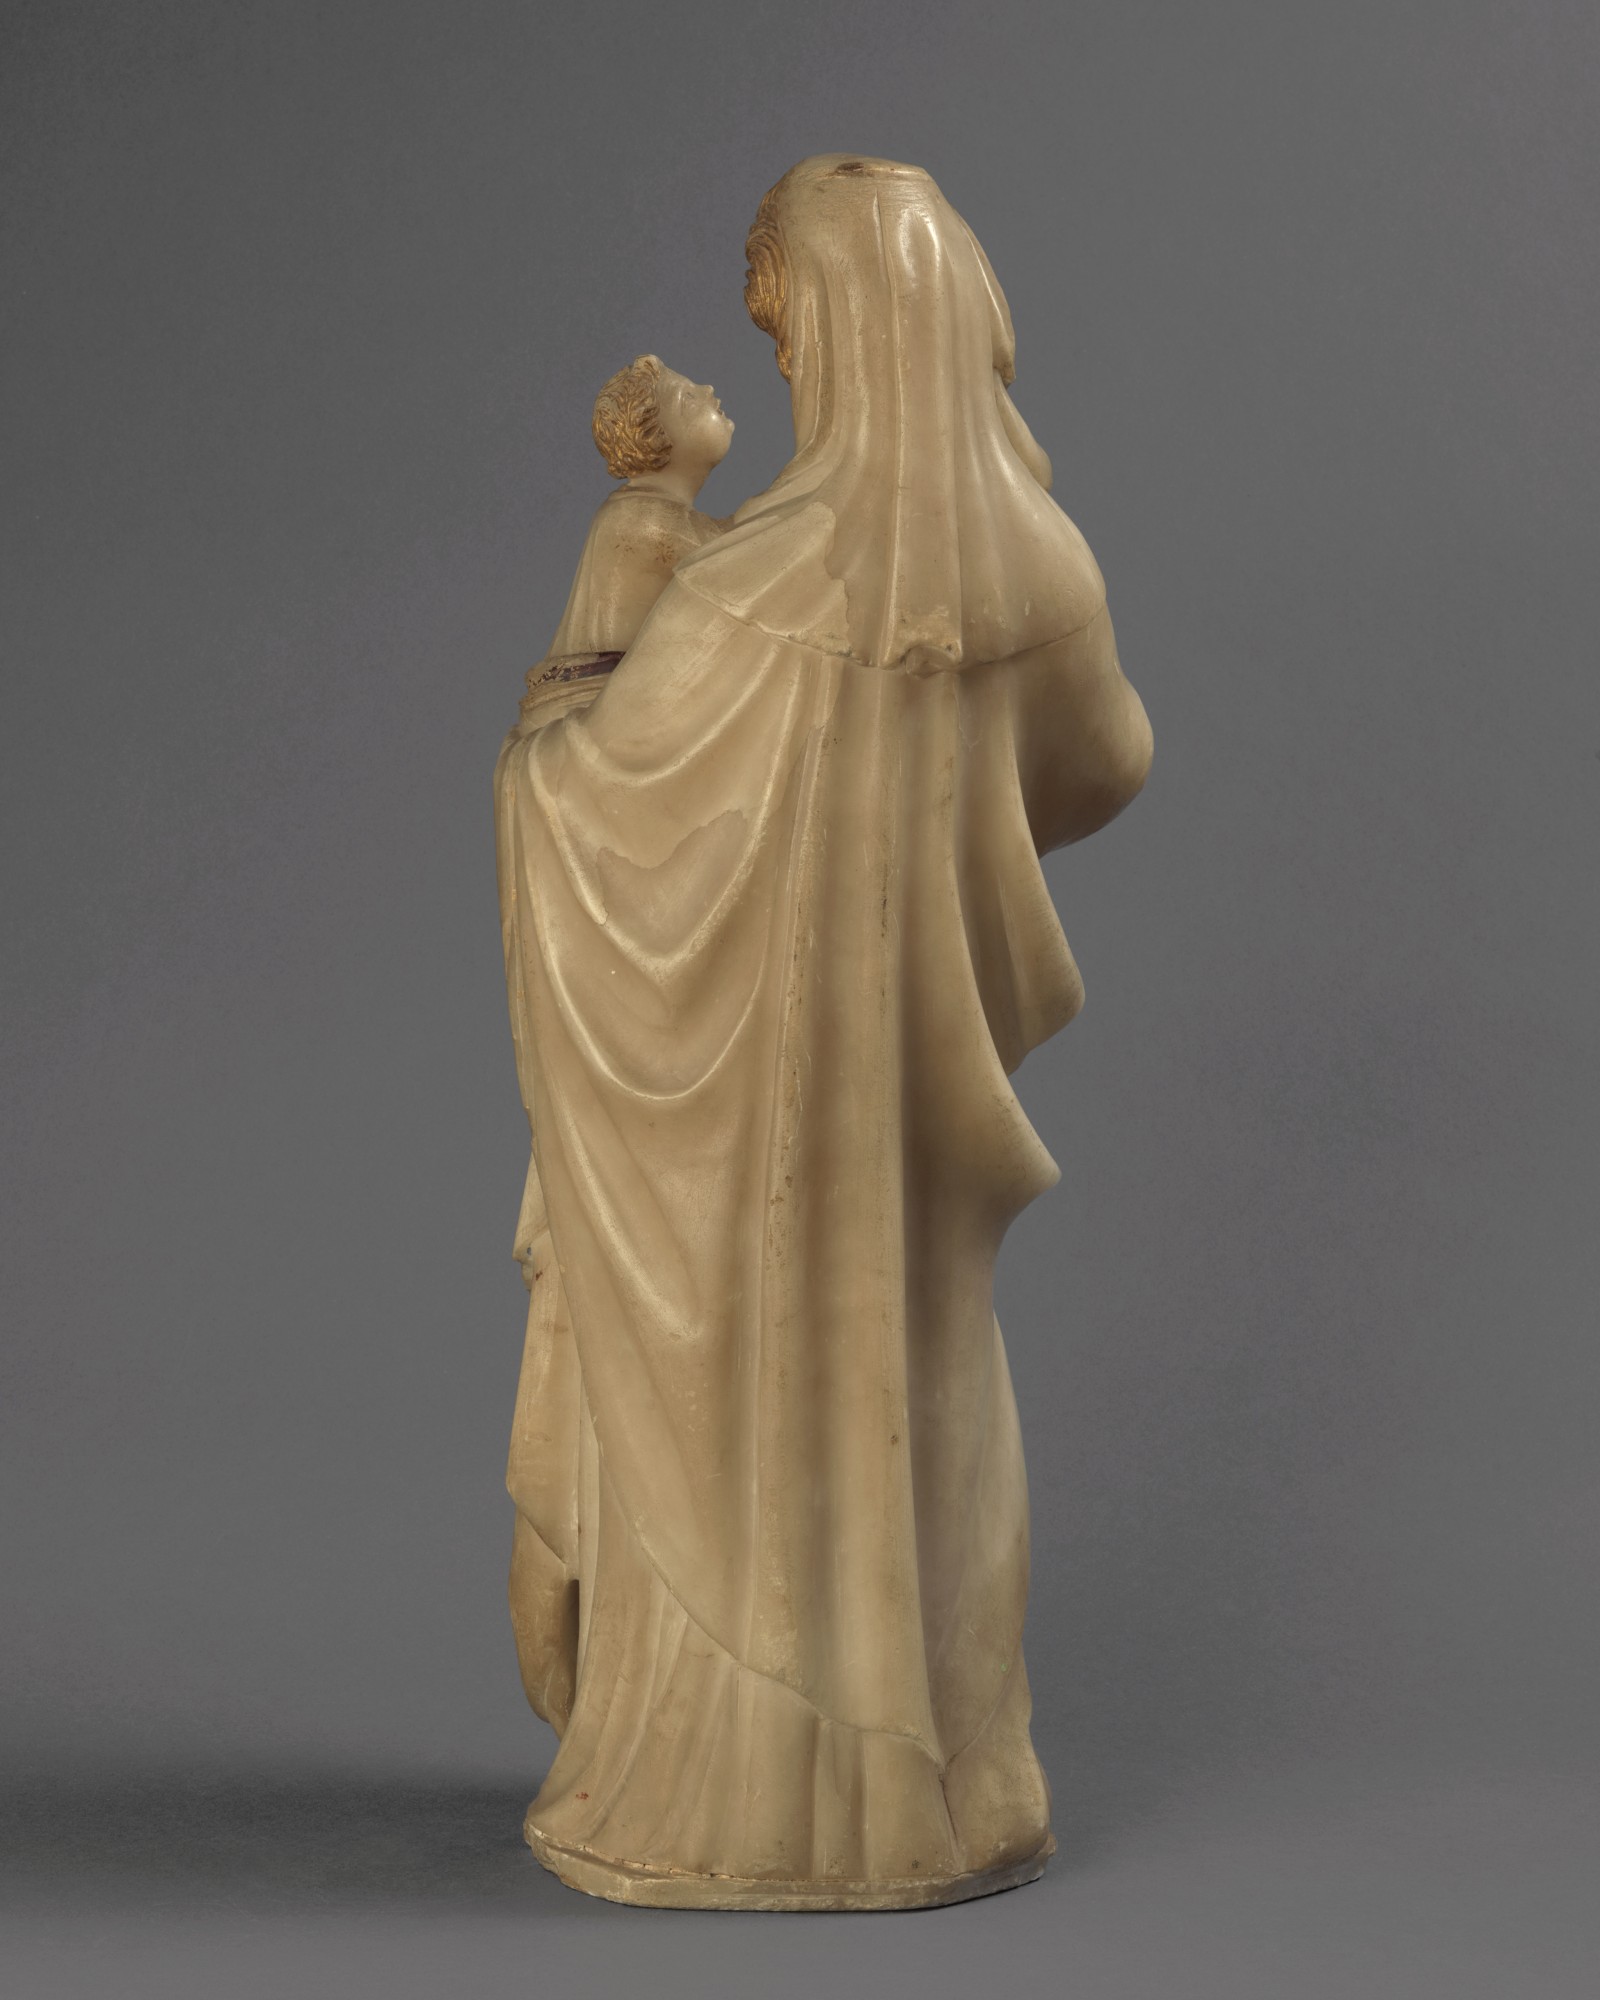 Madonna and Child, After Nino Pisano(1315 – Pisa – 1368), Italy, Sicily, c. 14